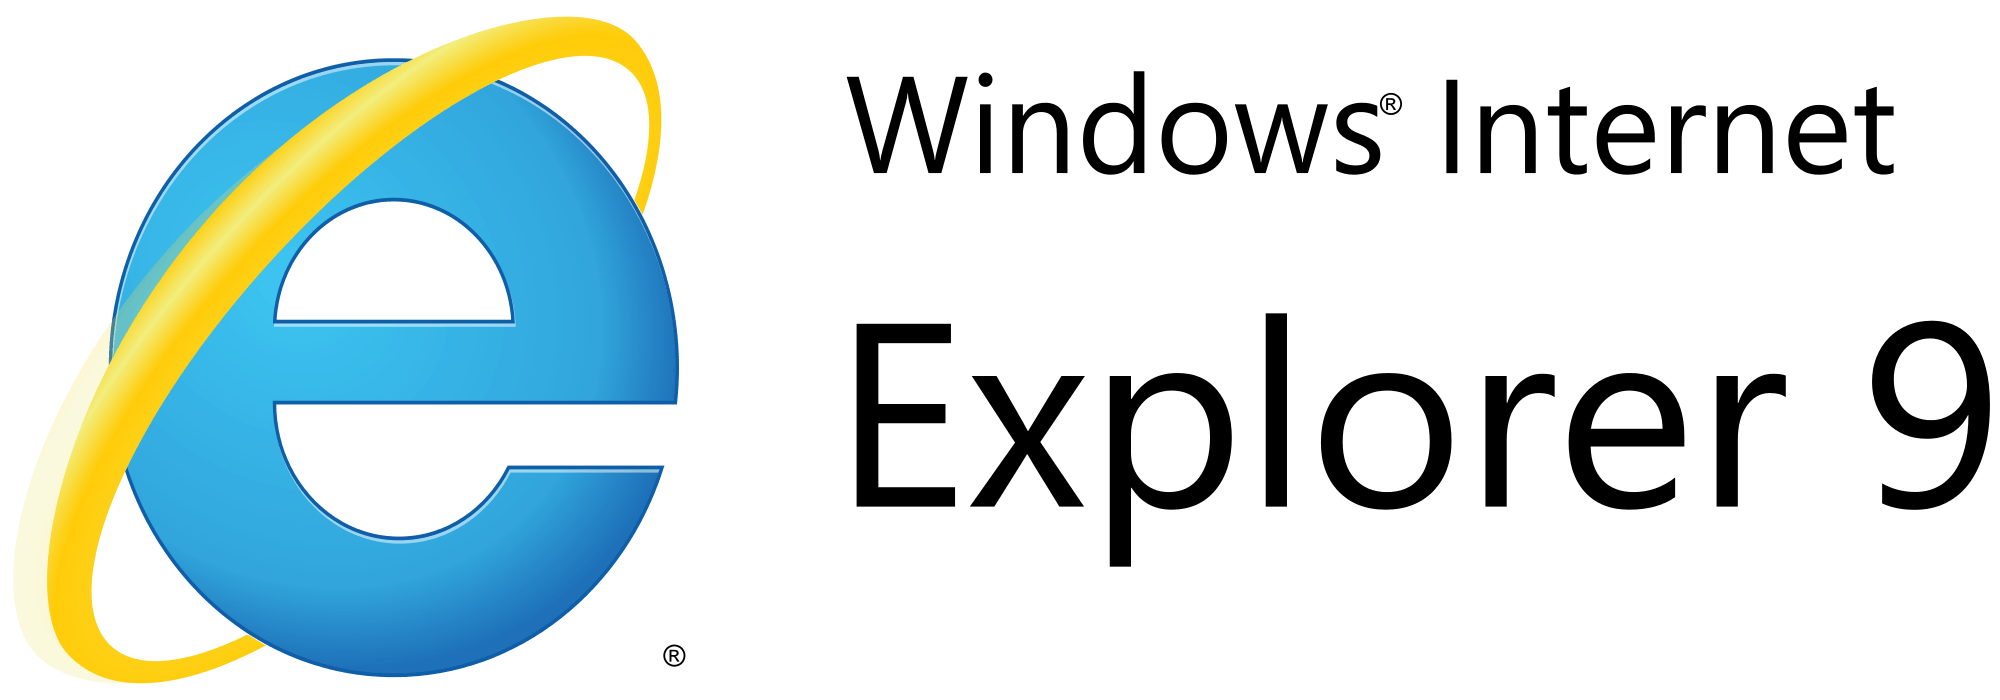 Internet Explorer 9 Logo - File:Windows Internet Explorer 9-Logo.svg - Wikimedia Commons